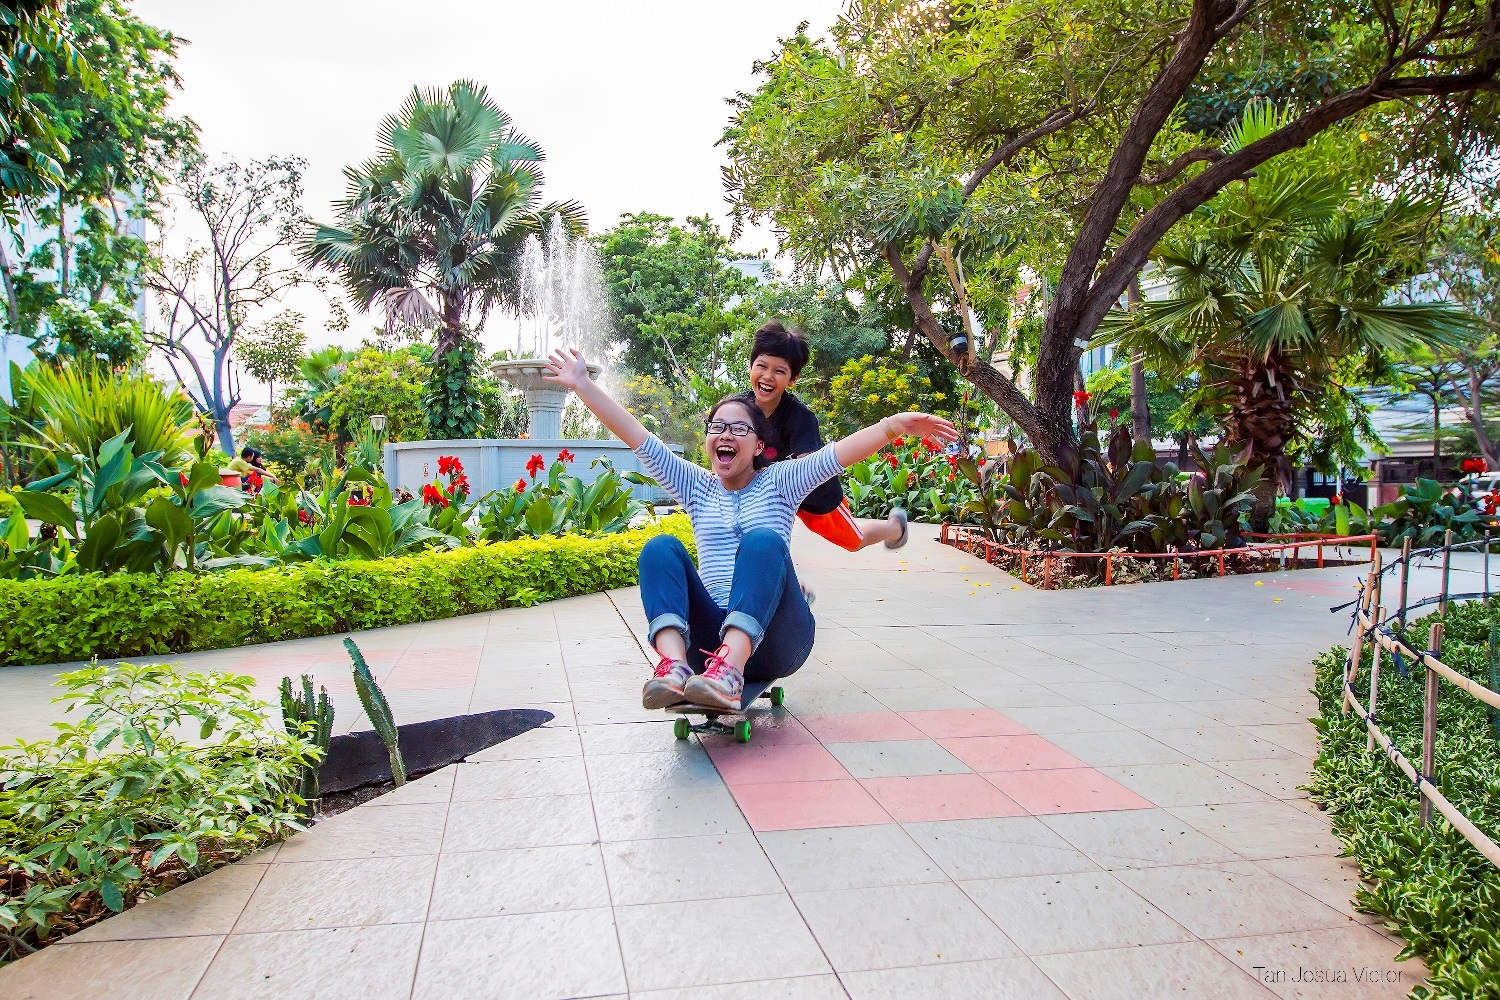  Salah satu taman di Surabaya menjadi wahana bermain yang ramah anak serta cocok untuk liburan keluarga | Sumber LensaIndonesia.com 